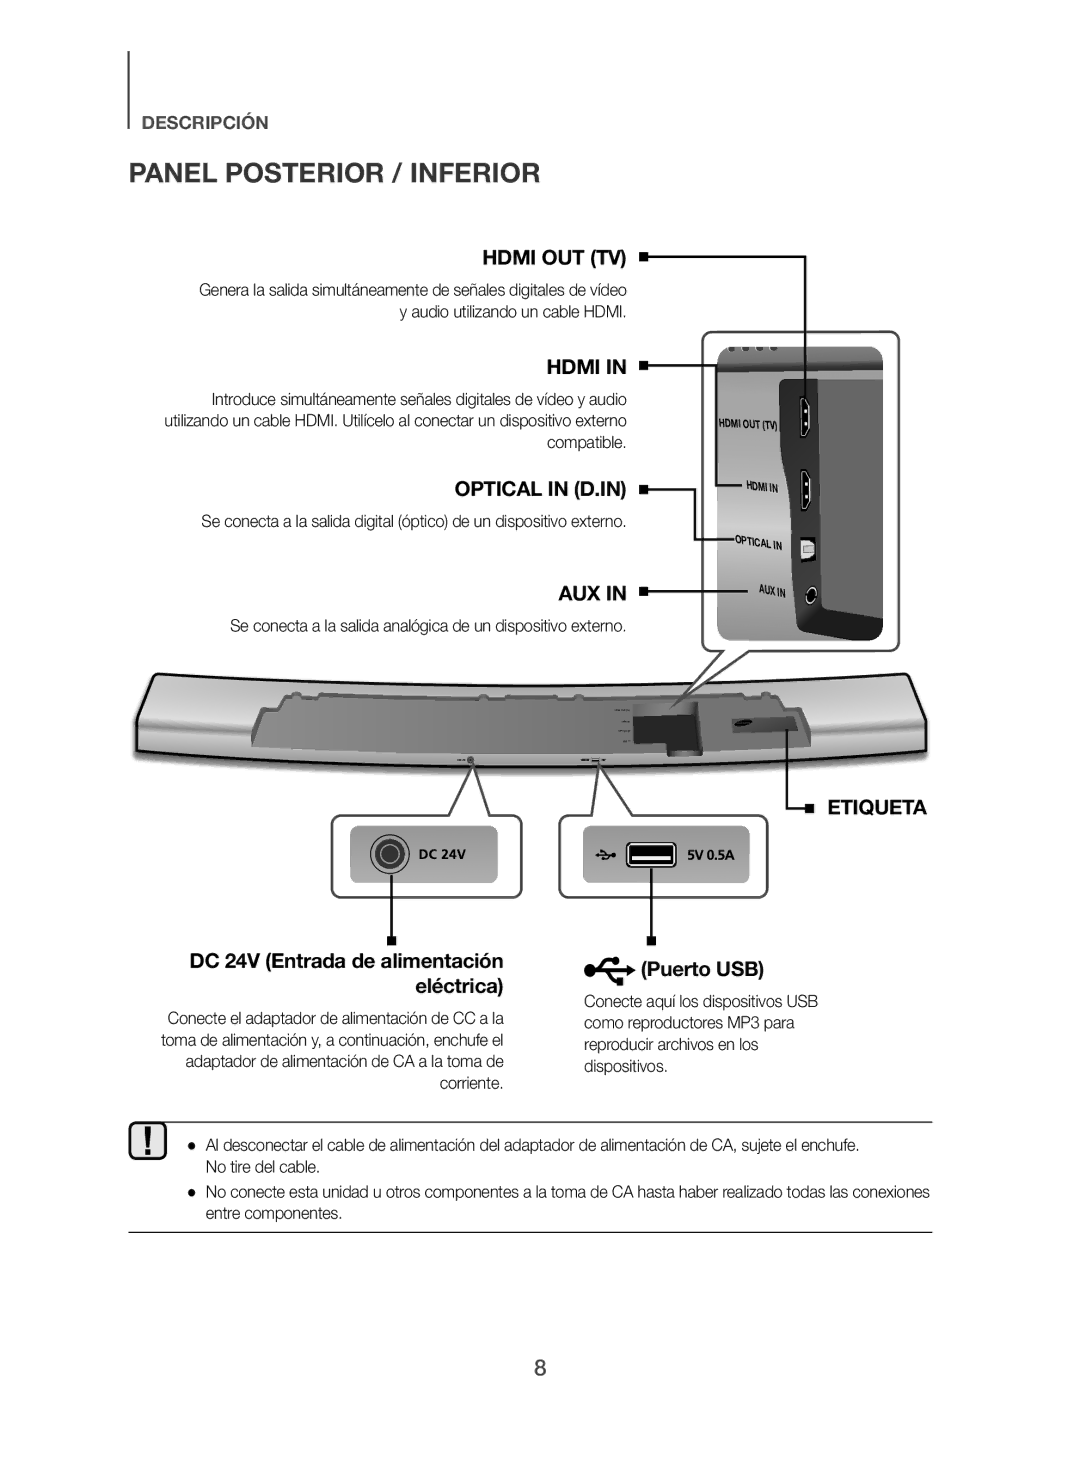 Samsung HW-H7501/ZF, HW-H7500/ZF Panel Posterior / Inferior, Se conecta a la salida analógica de un dispositivo externo 